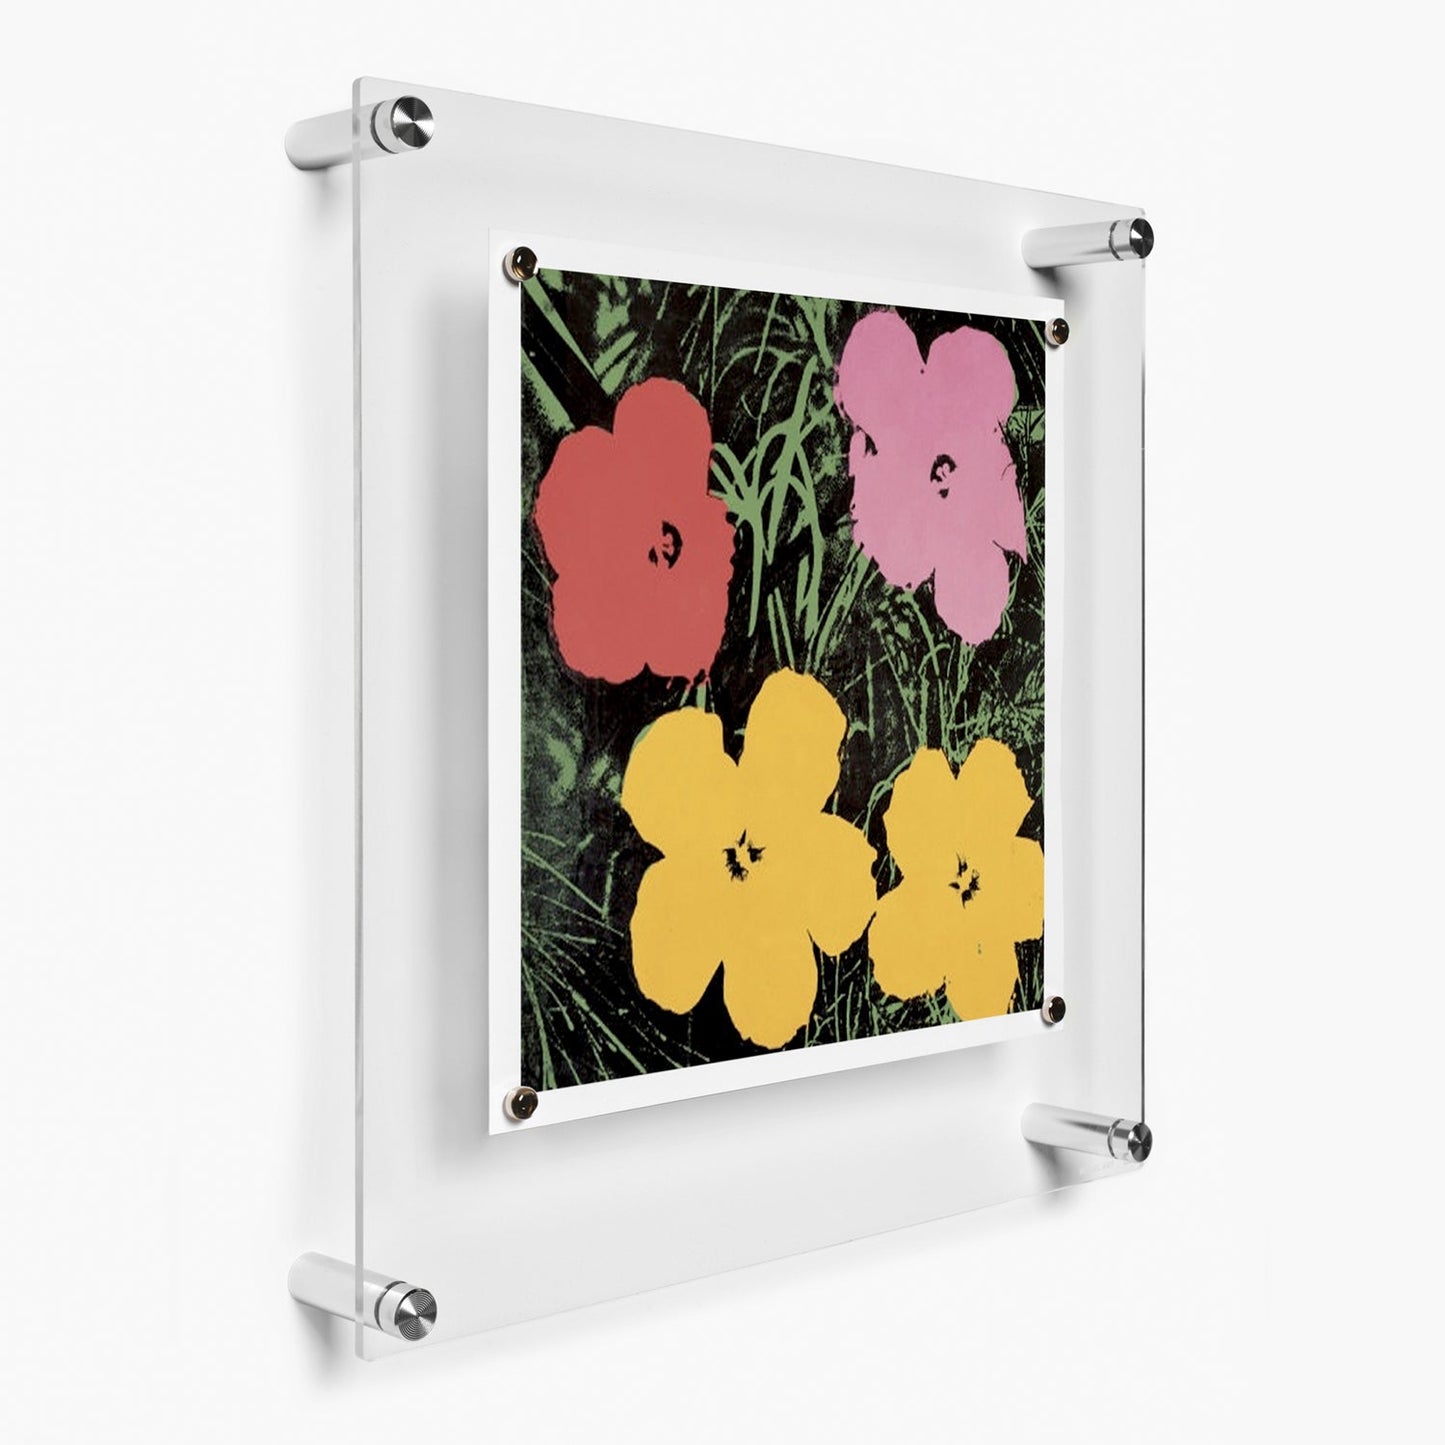 WS Single: 23" x 23" Single Panel Frame + Magnets